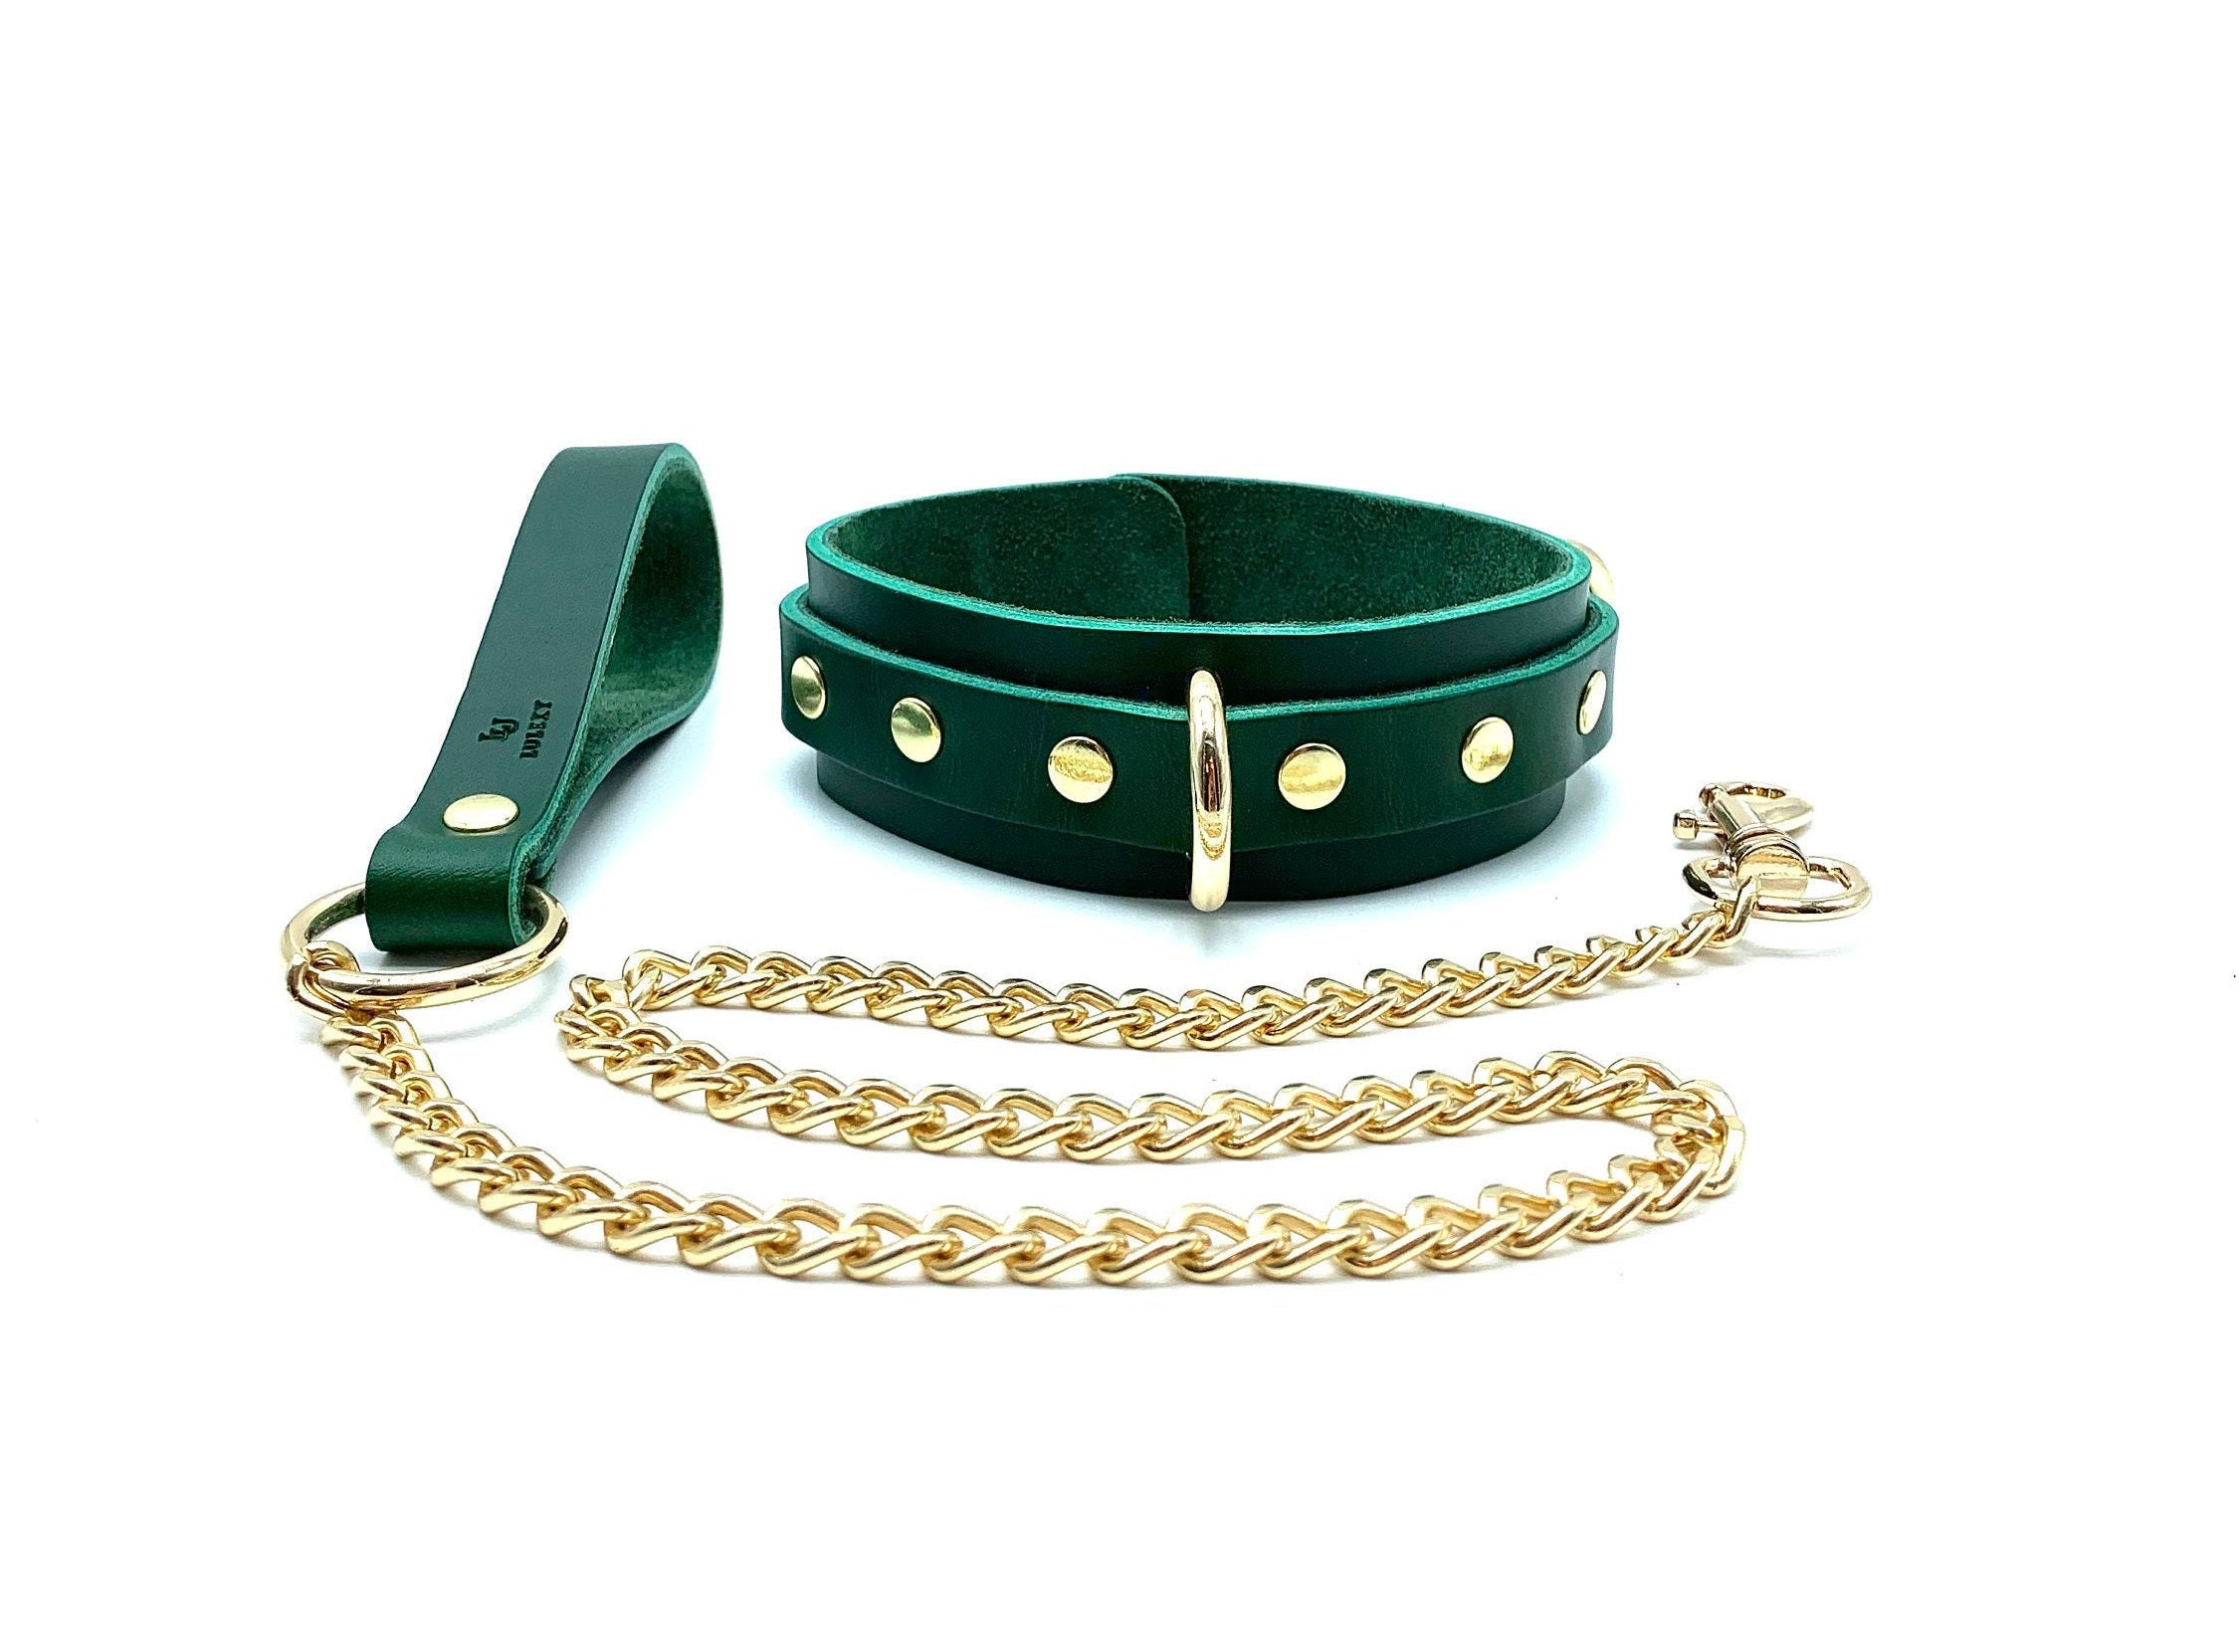 7 Piece Bondage Kit "Mona", Italian Leather Green BDSM Set, Wrist and Ankle Cuffs, Thigh Cuffs, Collar, Chain Leash, Custom Engraving photo